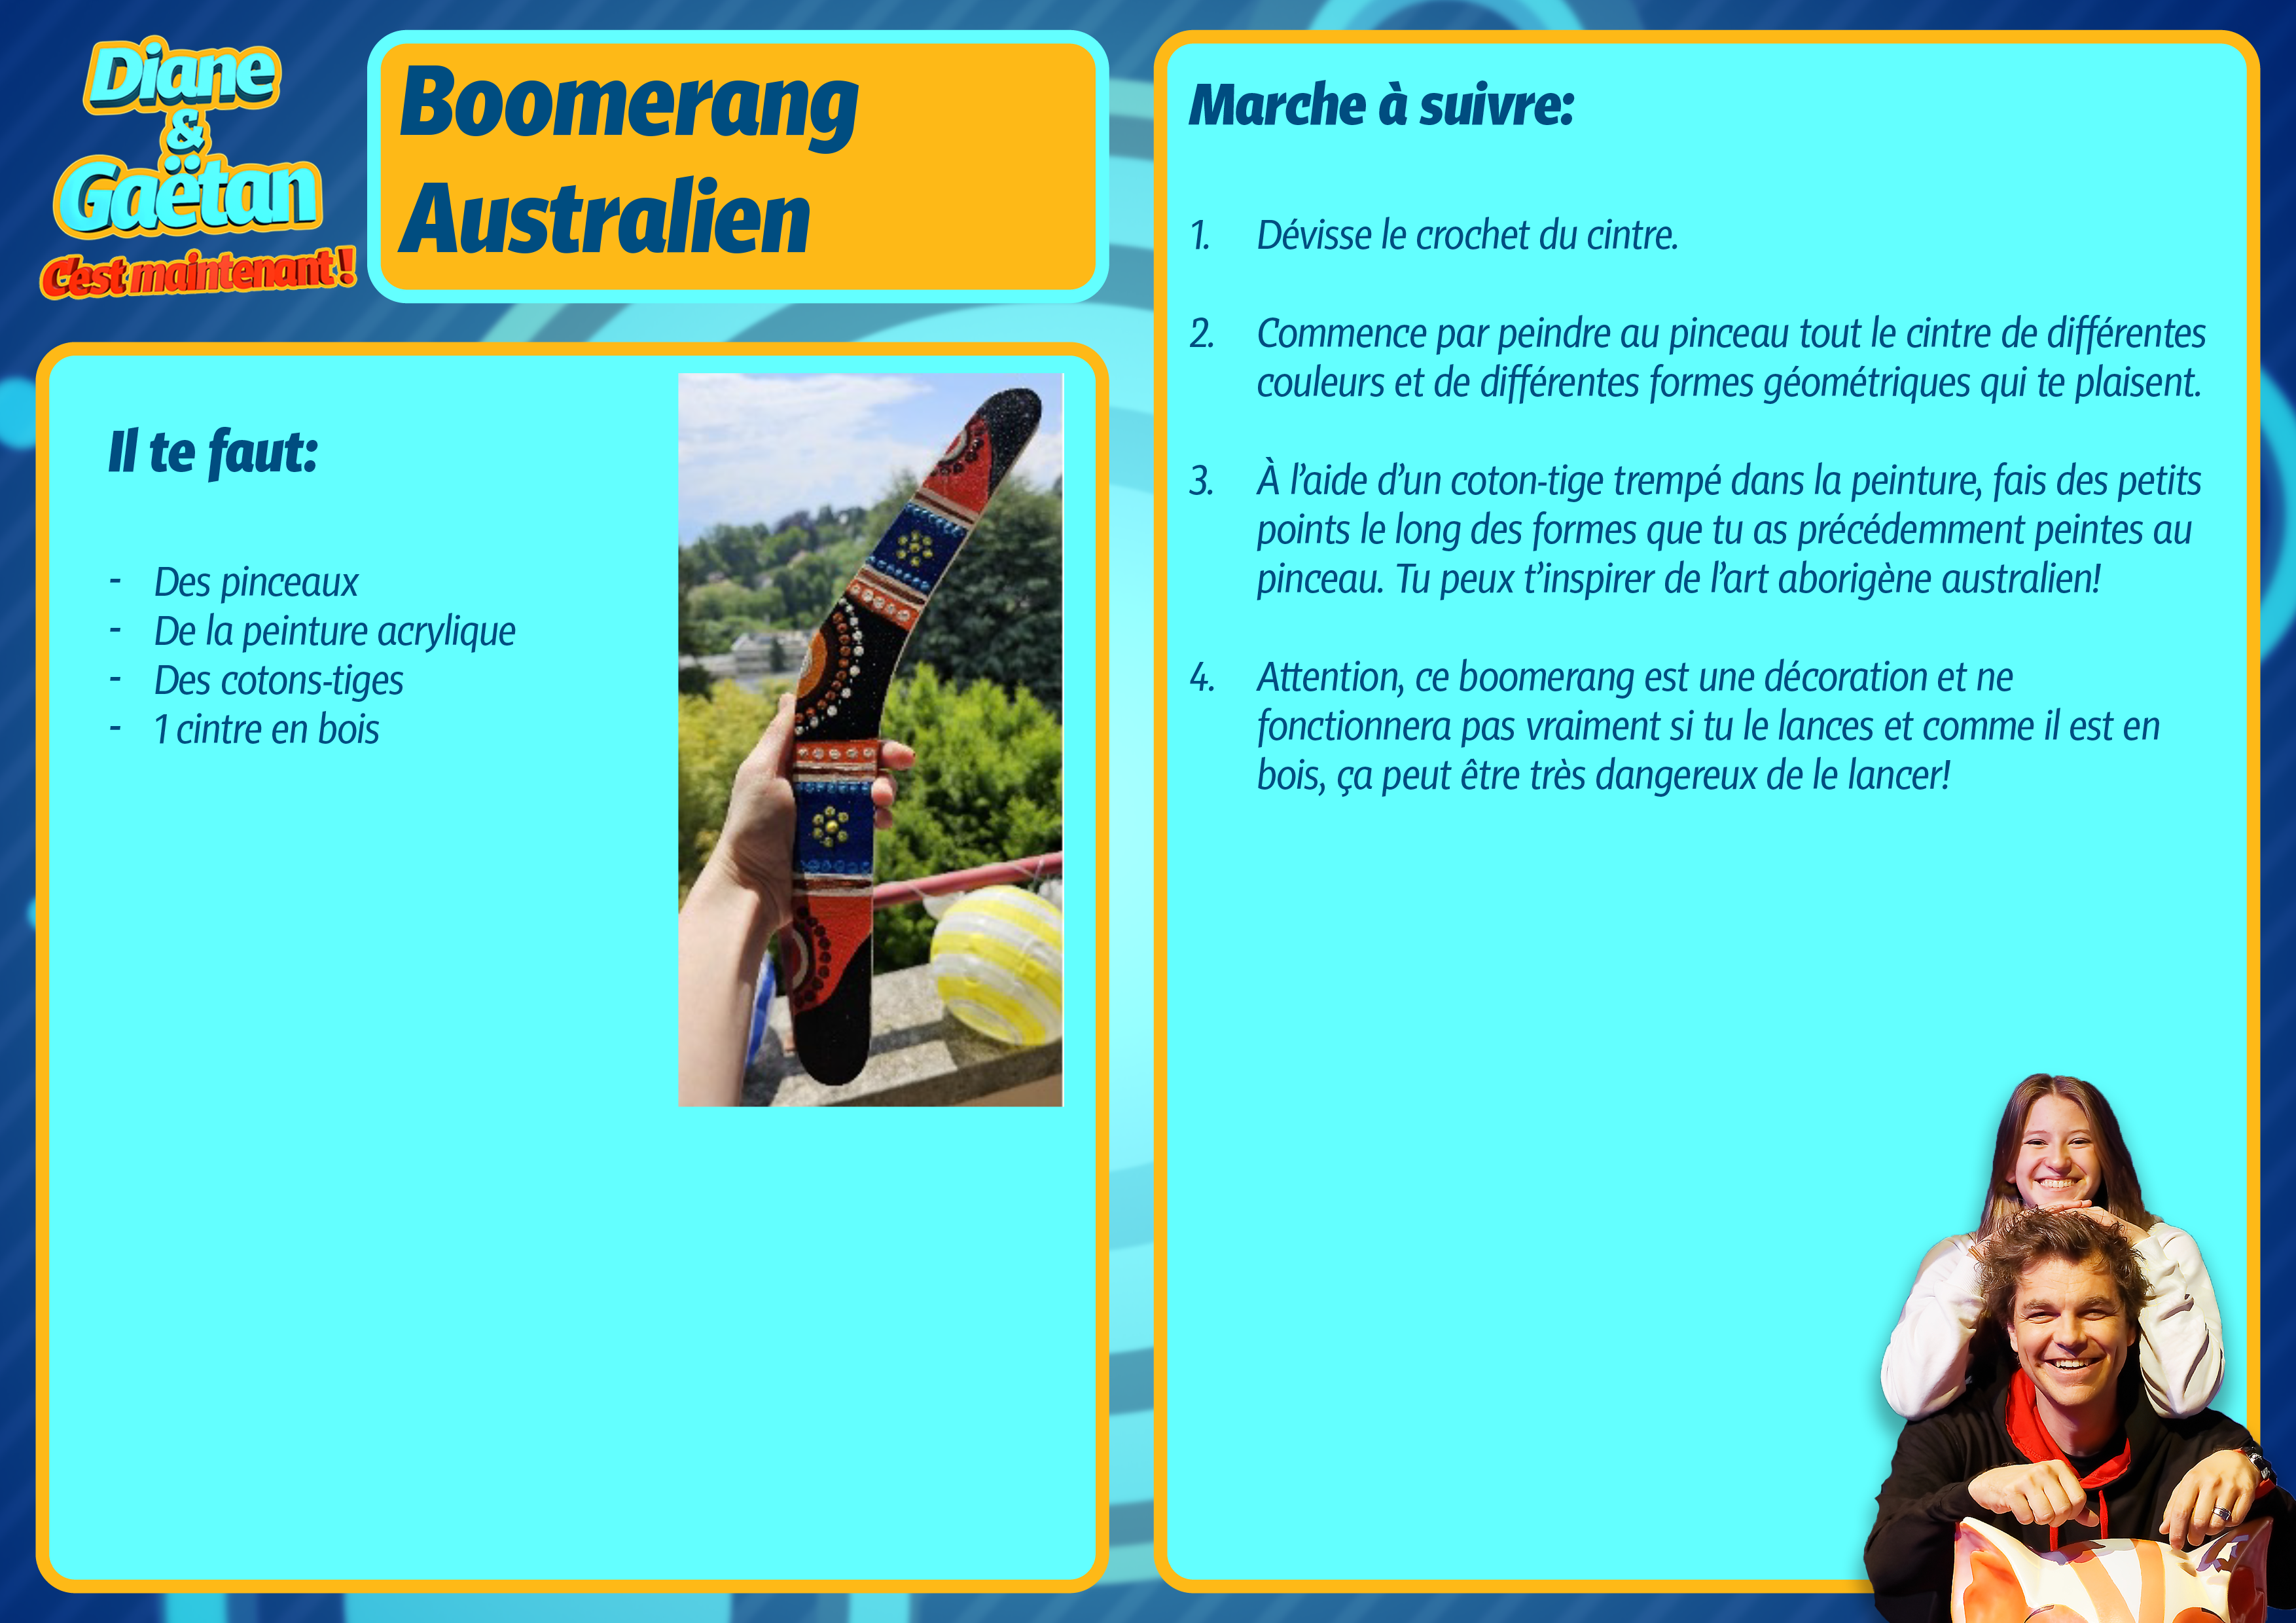 Le boomerang australien